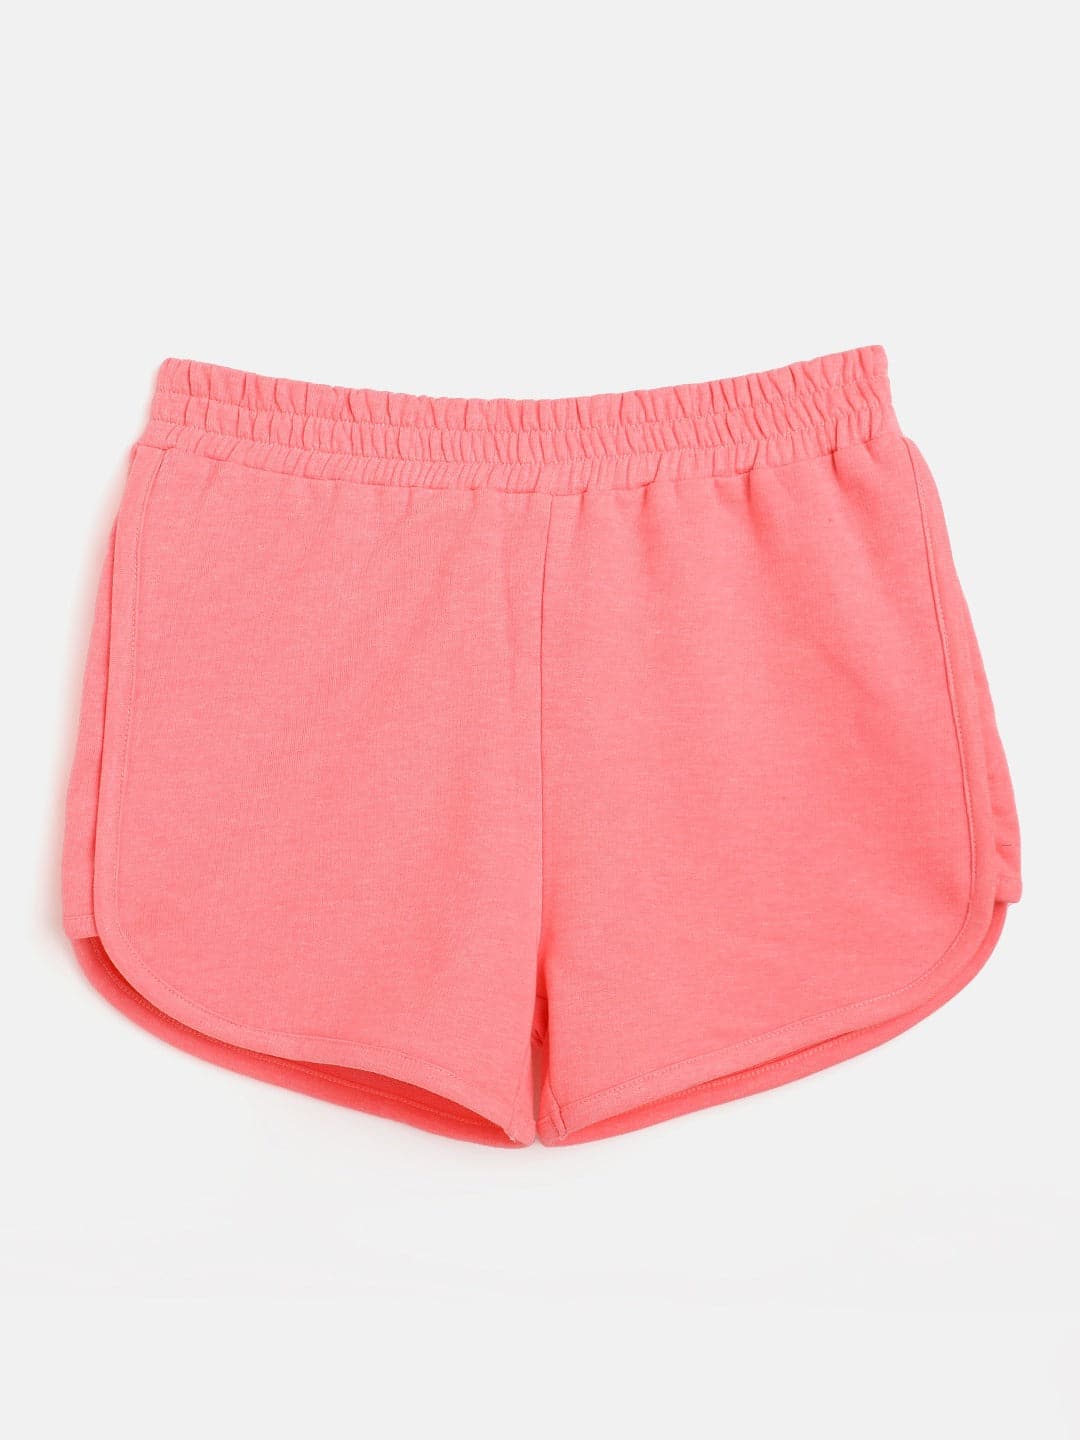 Girls Neon Pink Terry Solid Shorts - Lyush Kids